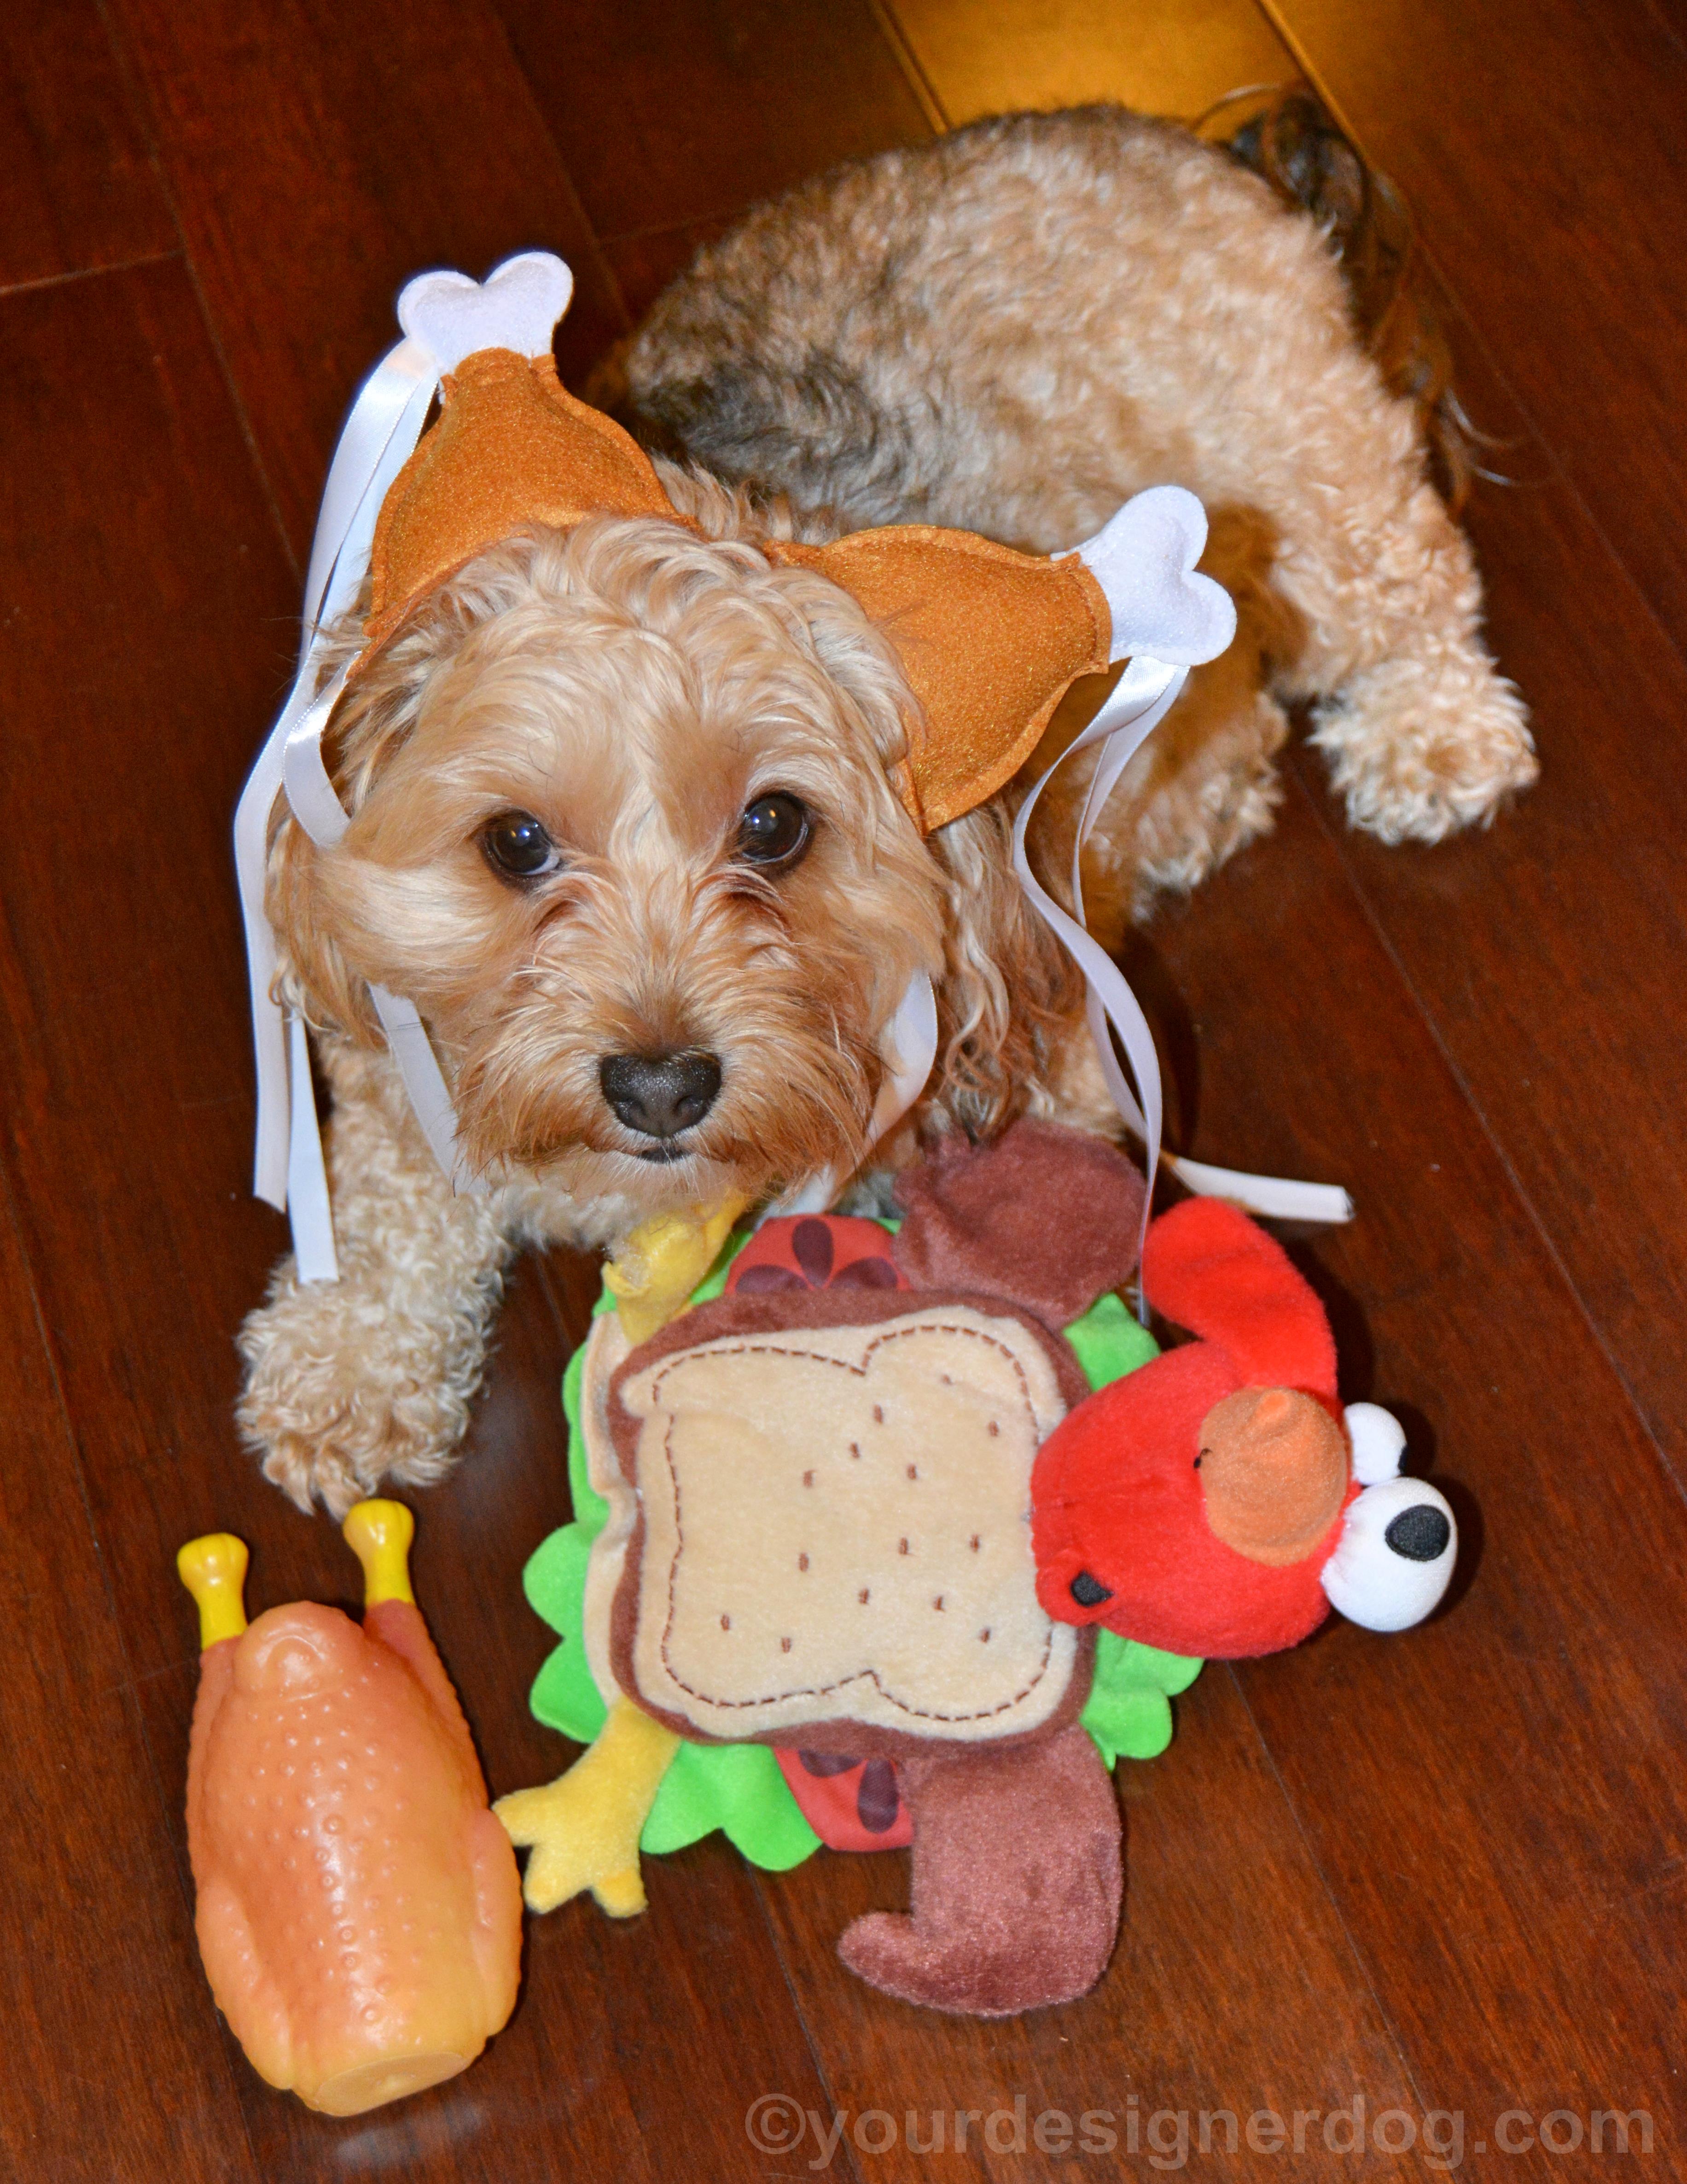 dogs, designer dogs, yorkipoo, yorkie poo, turkey day, turkey, thanksgiving